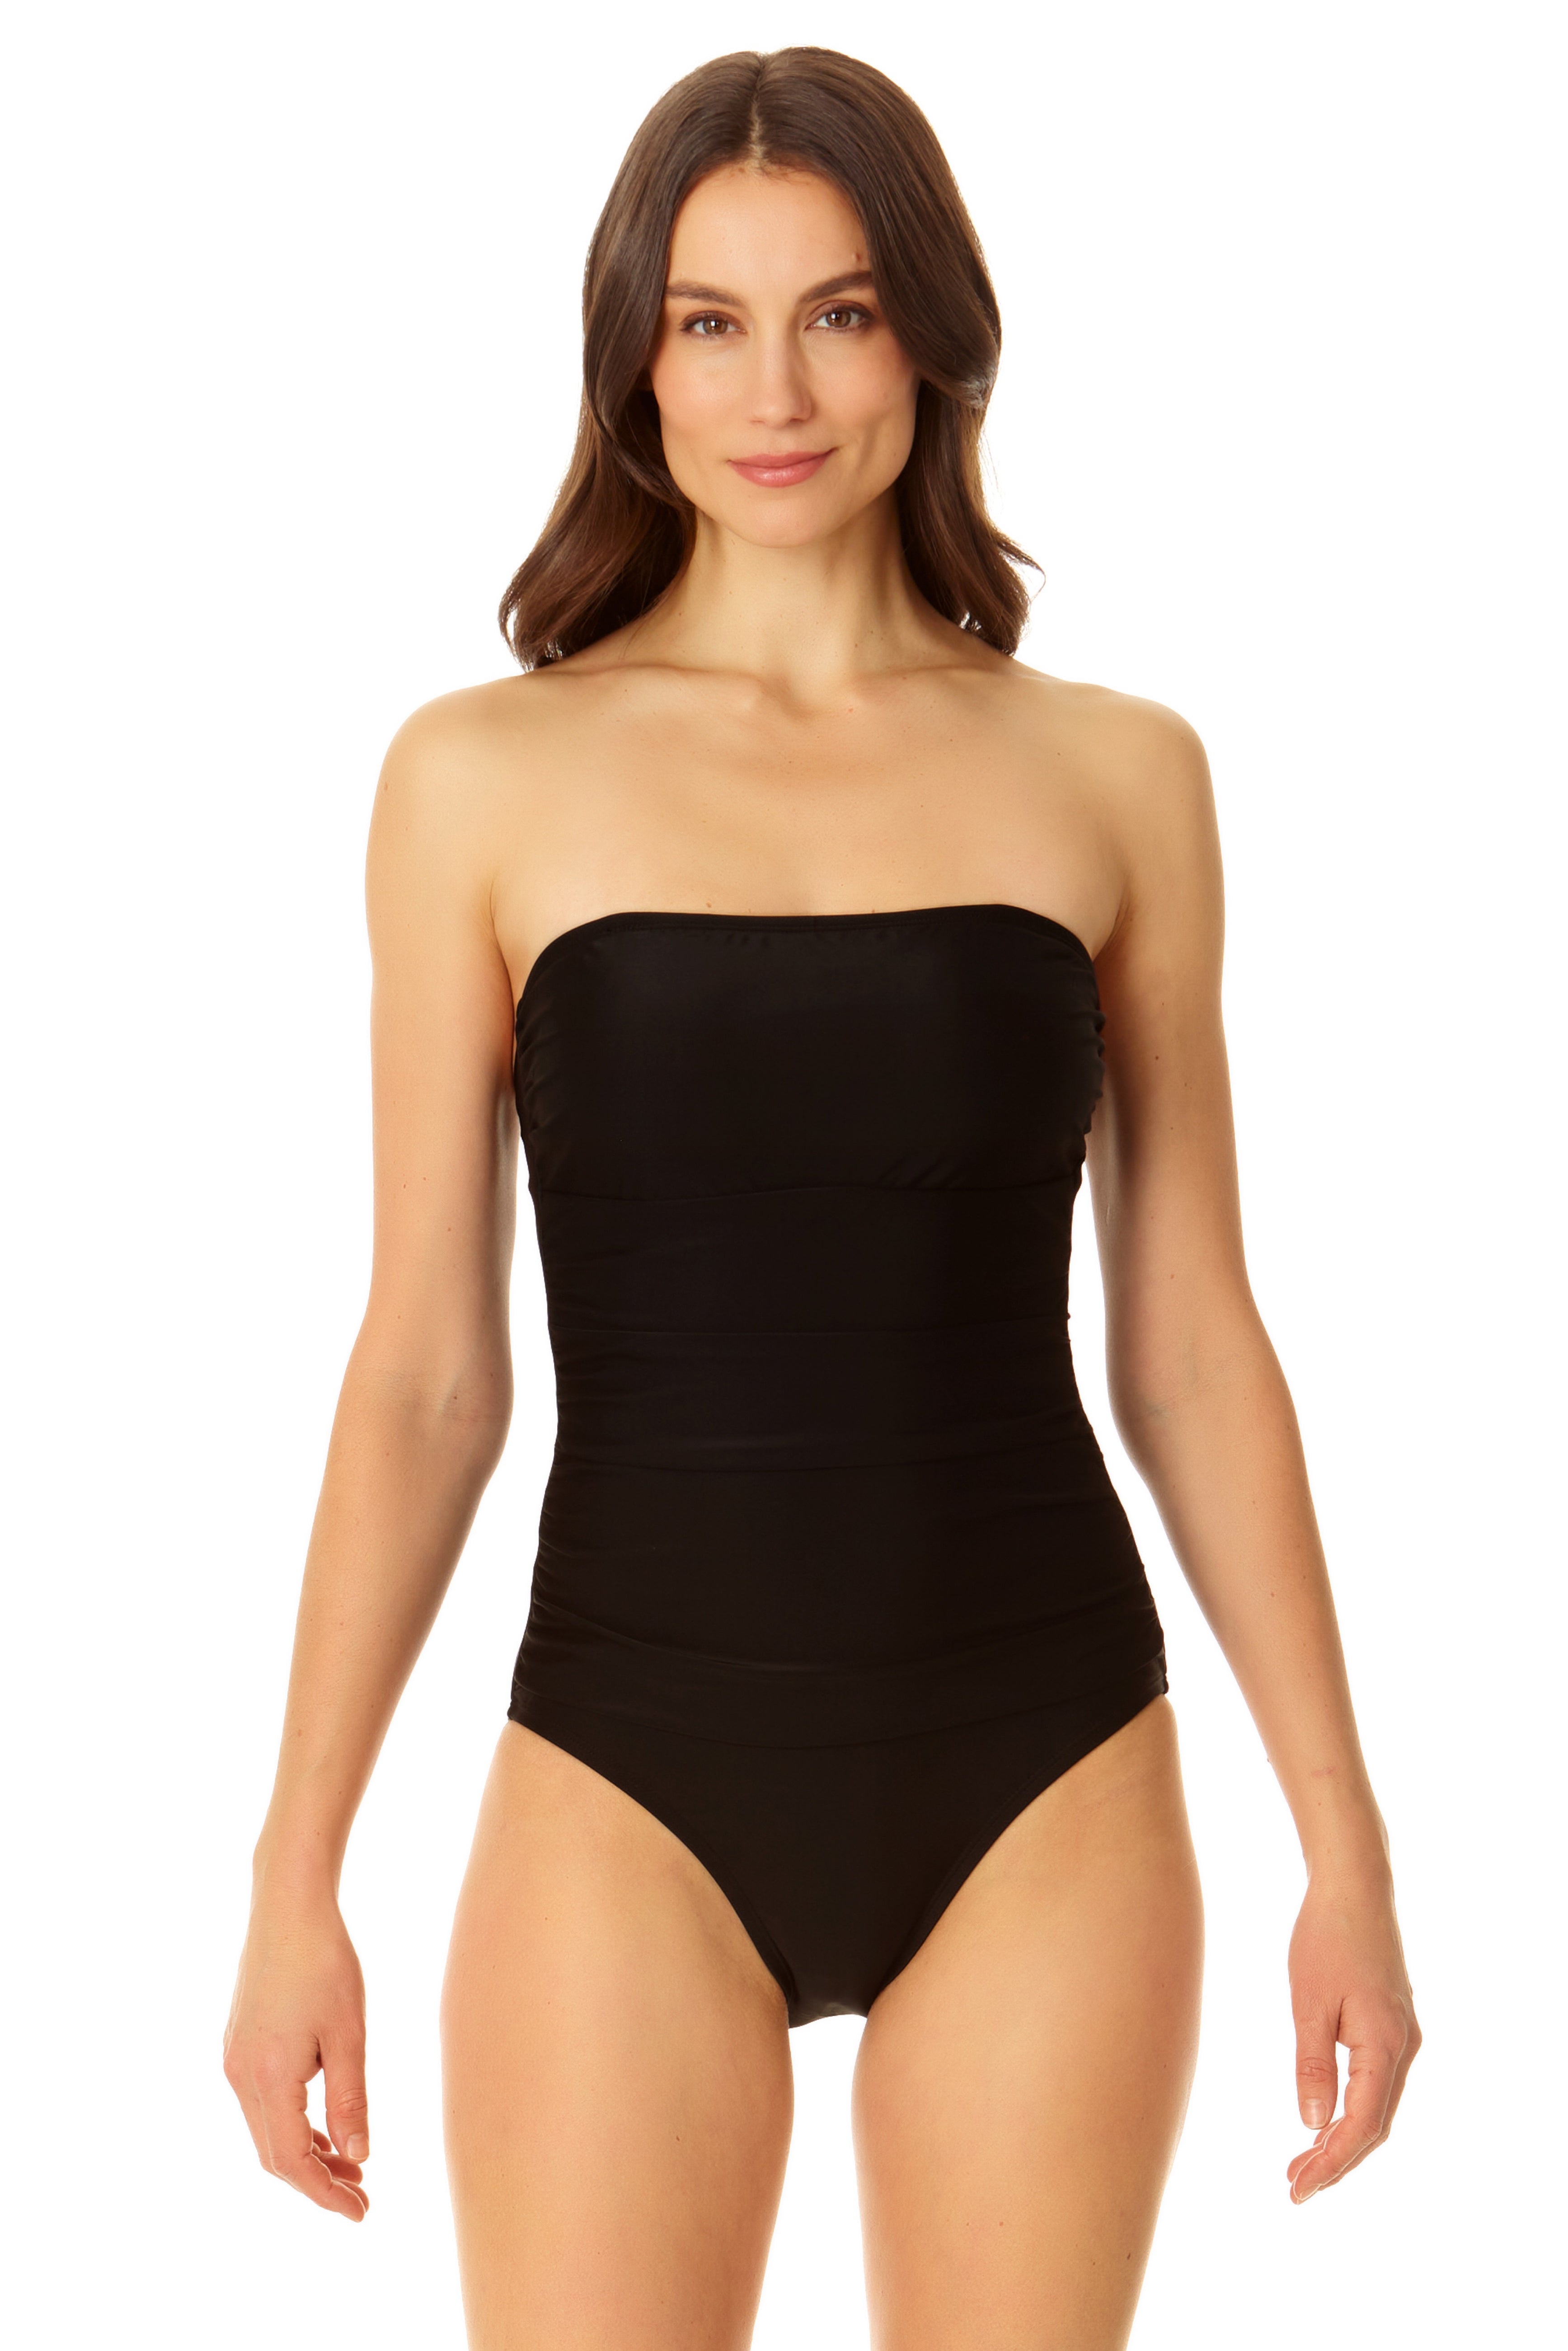 Women's Zip Front High Neck One Piece Swimsuit in Black - Coppersuit